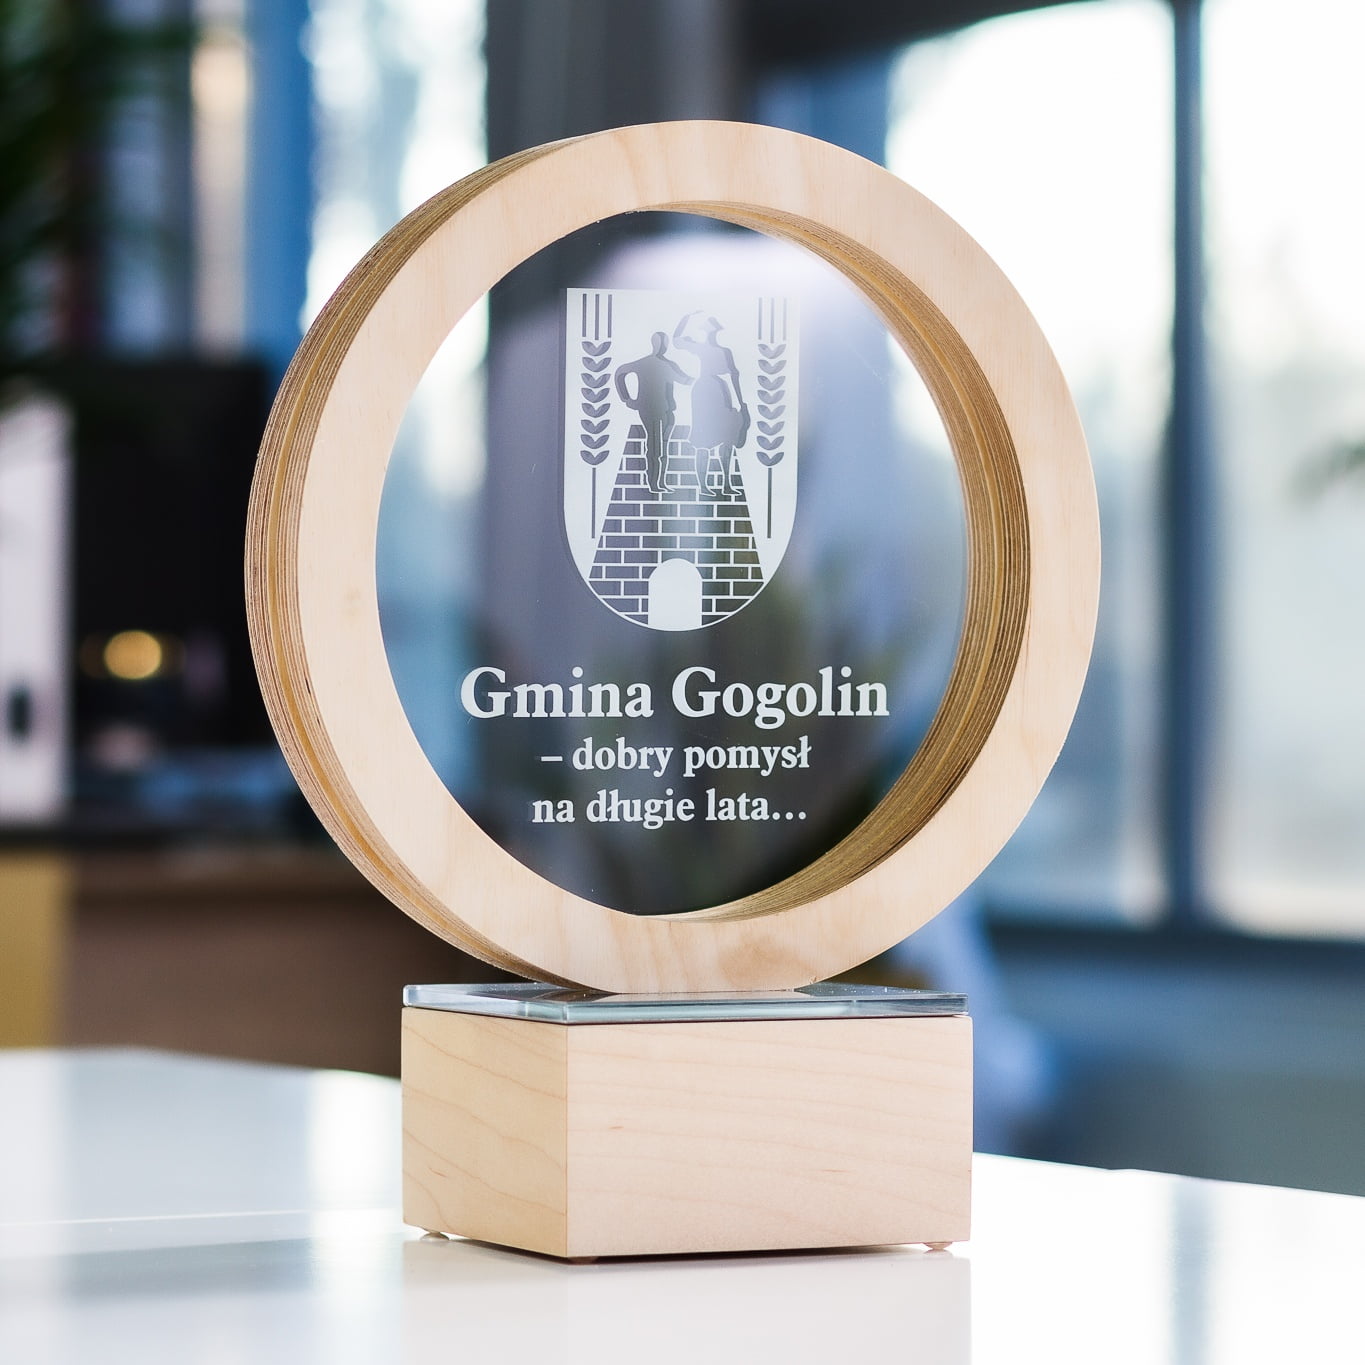 CUSTOM DESIGN : Unique Awards, Trophy or Recognition Plaque Idea - Wood  Engraved